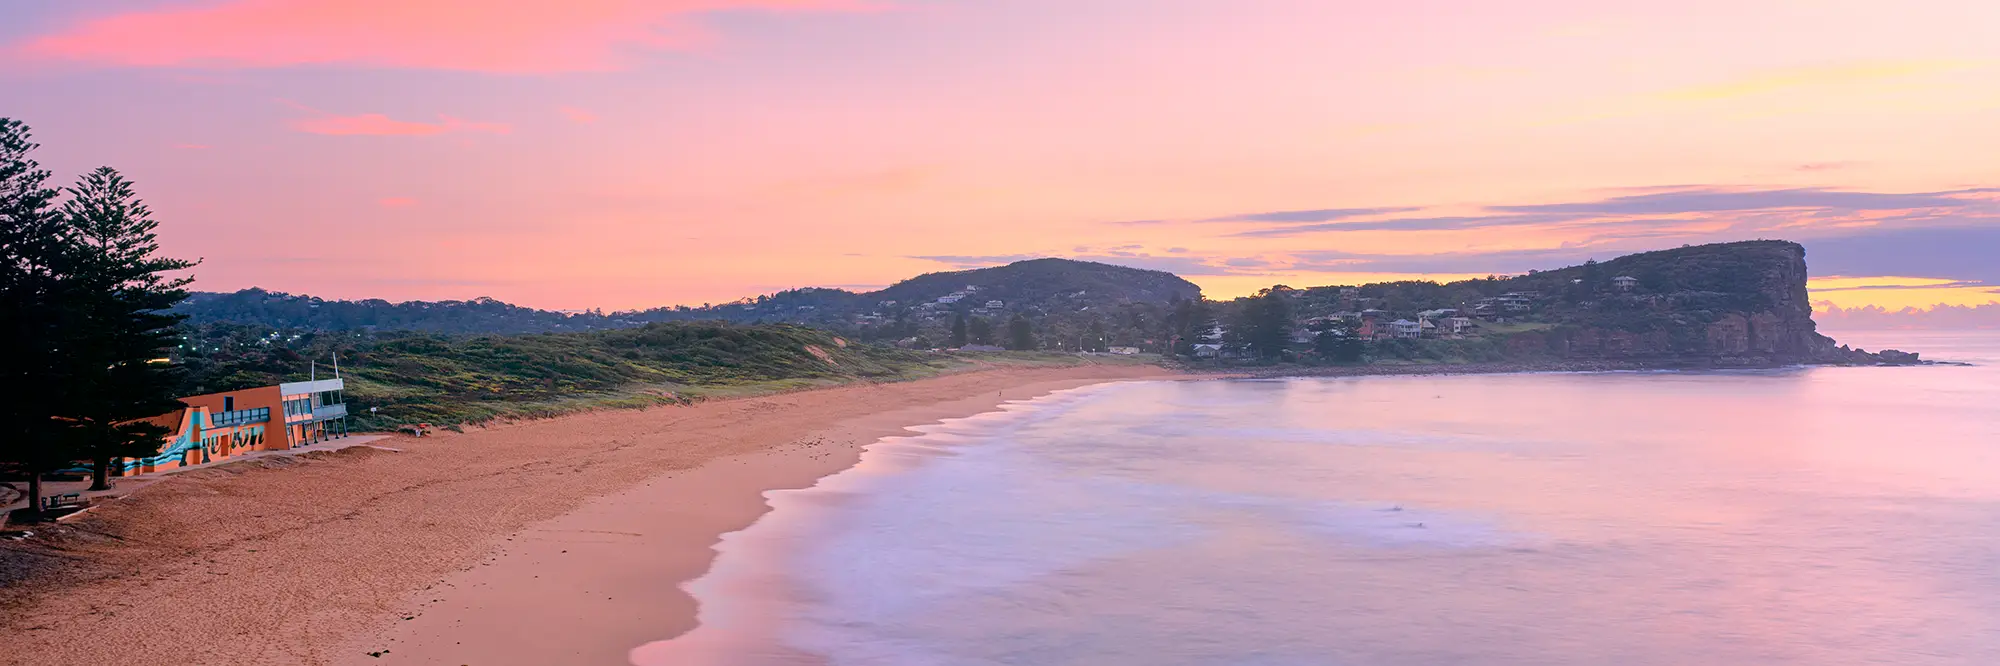 Avalon Beach Panoramic Sunrise Photo - Fine Art Images